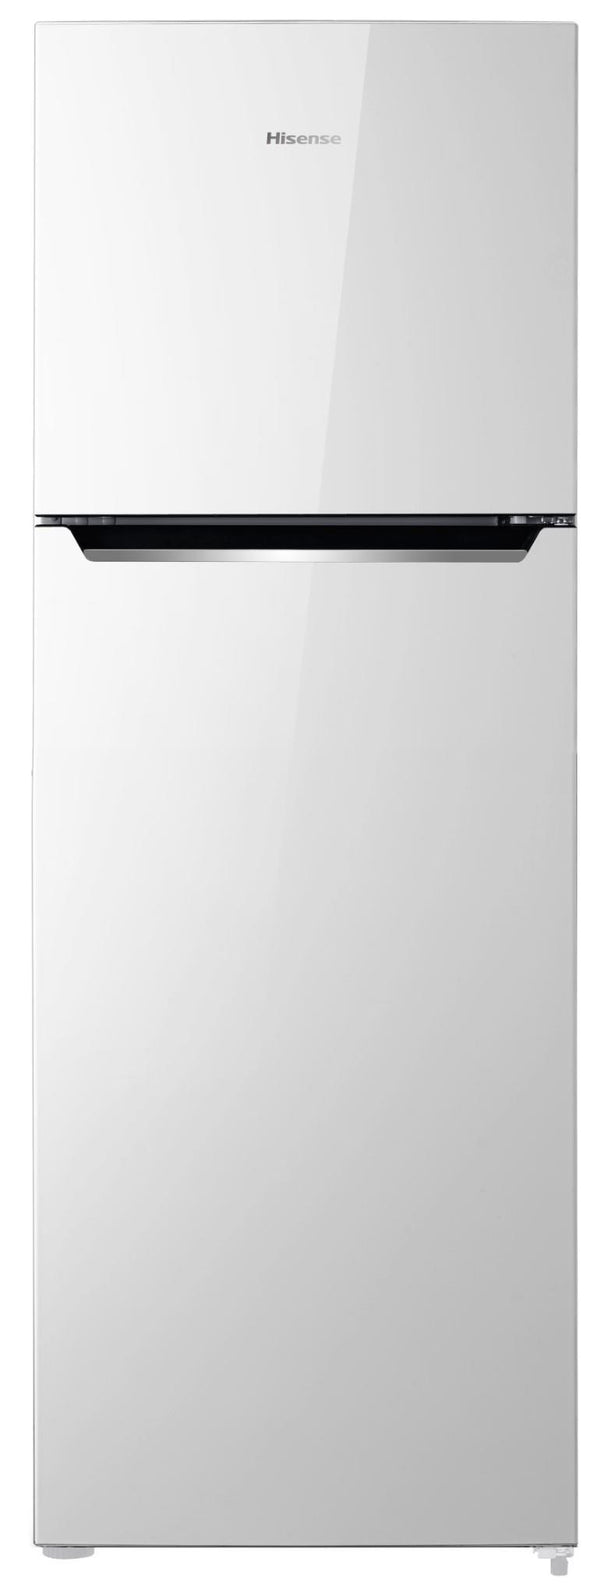  Hisense 326l top mount fridge